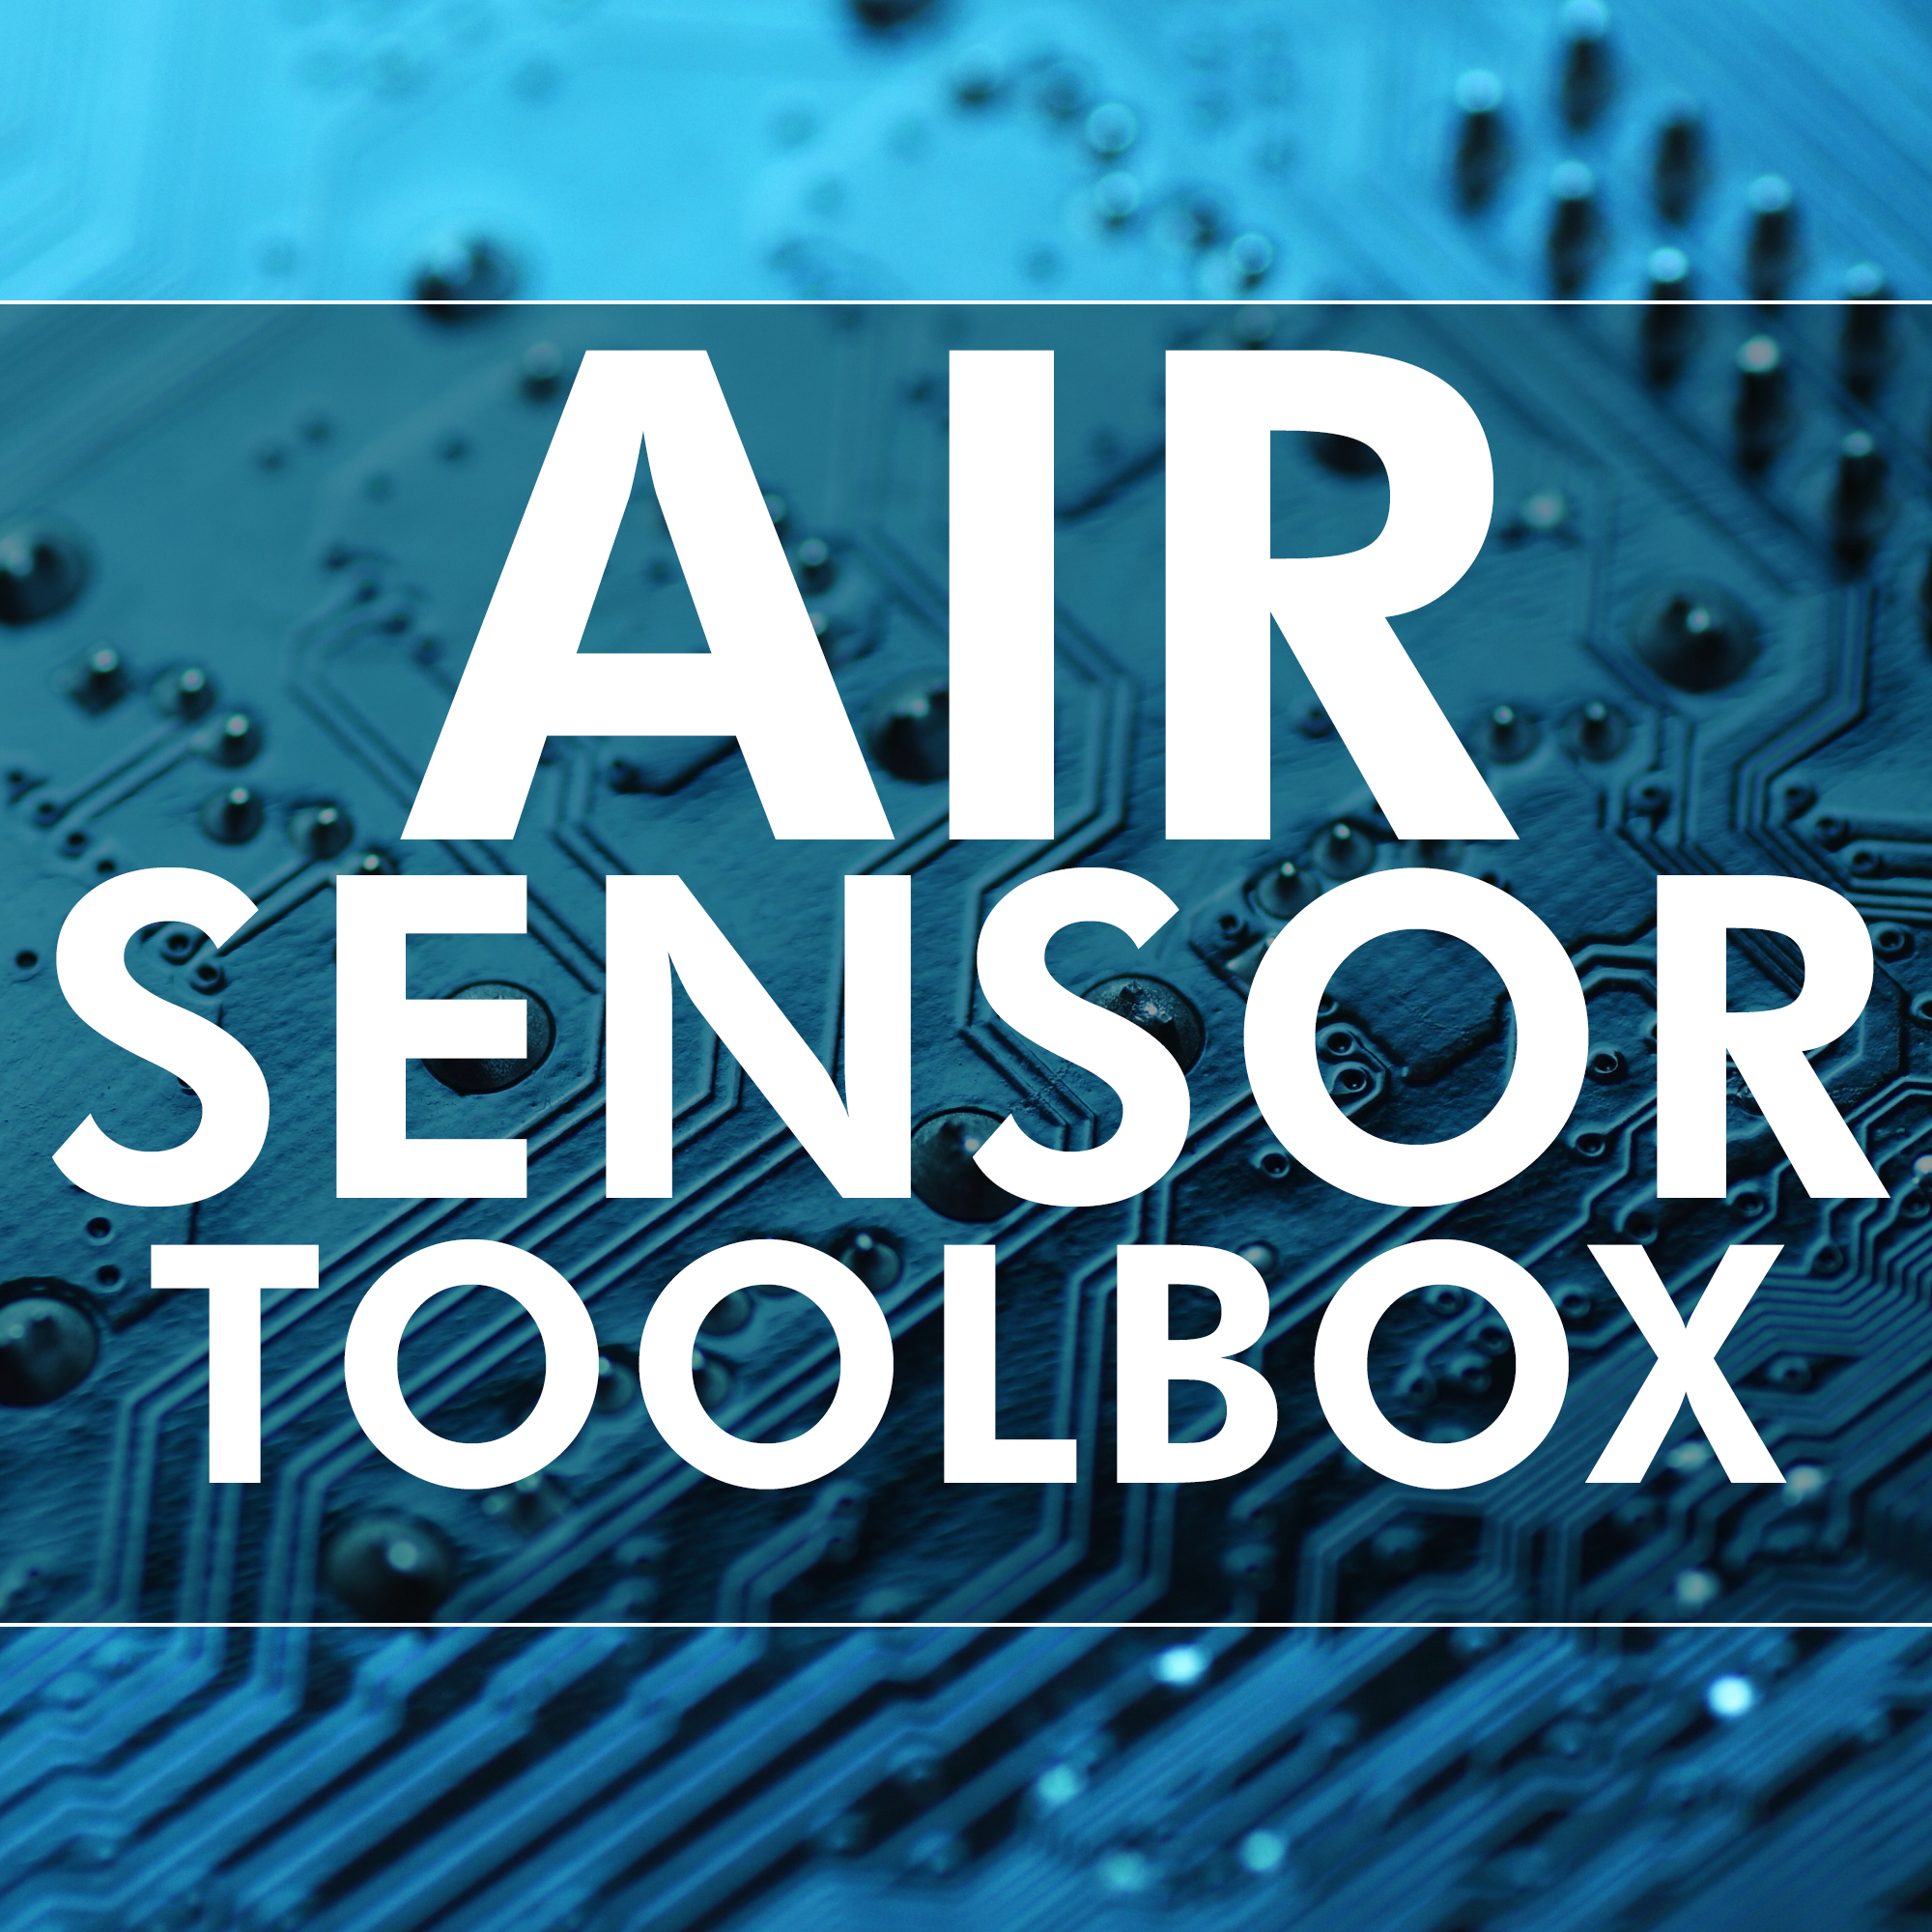 Blue text that states "EPA Air Sensor Toolbox"